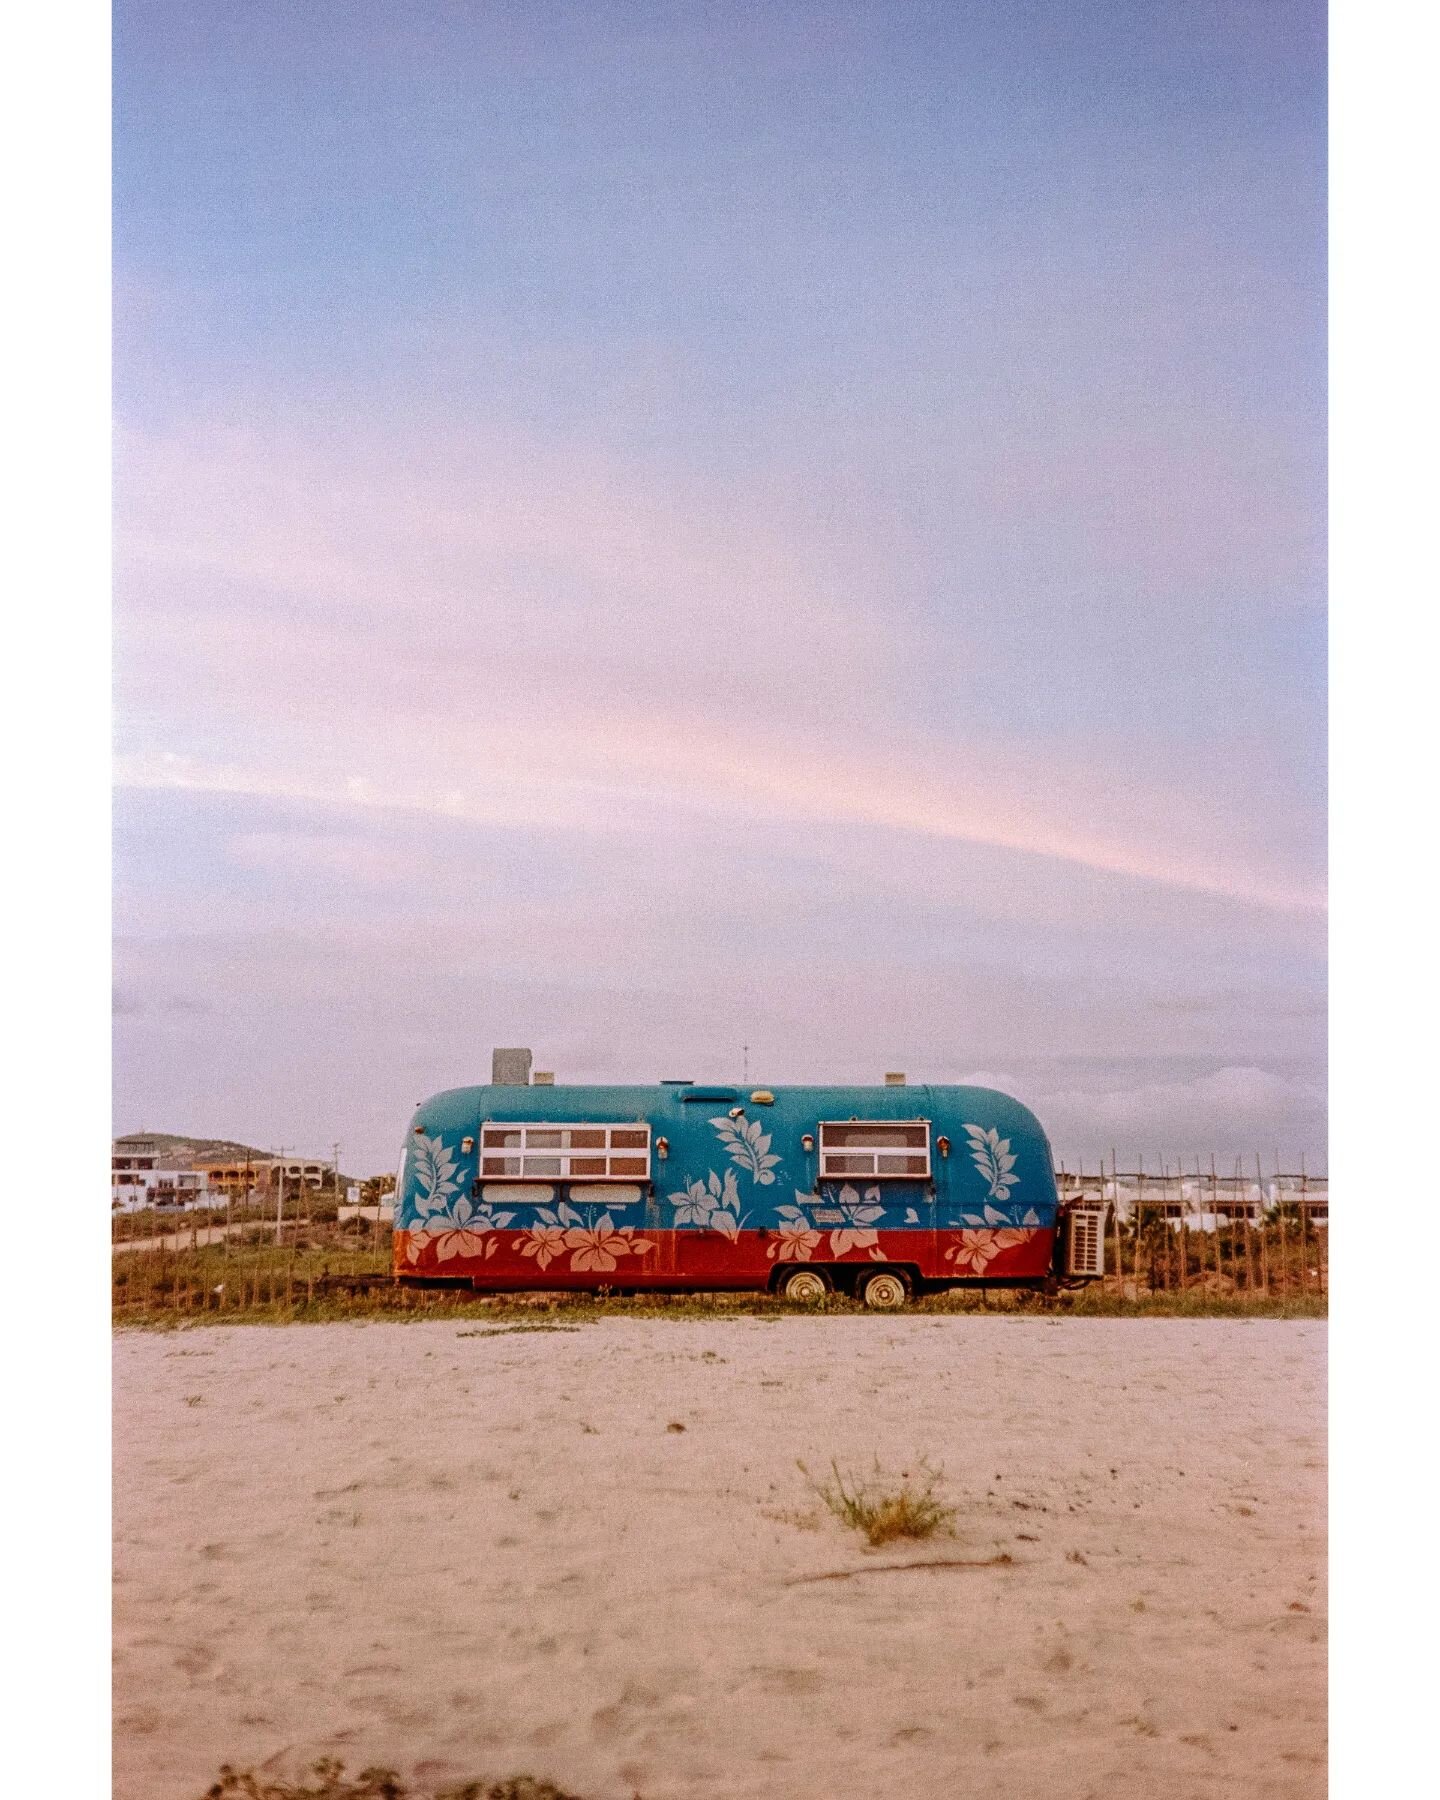 Lancha con fondo de cristal
Kodak Portra 400 &mdash; Nikon S3
.
.
.
.
.
.
.
.
.
.
.
.
.
.
.
.
.
.
.
.
#kodakportra400 #nikons3 #combi #vanlife #surf #loscabos #cerritosbeach #beach #surfing #analog #shotonfilm #grainisgood #somewheremagazine #mexico 